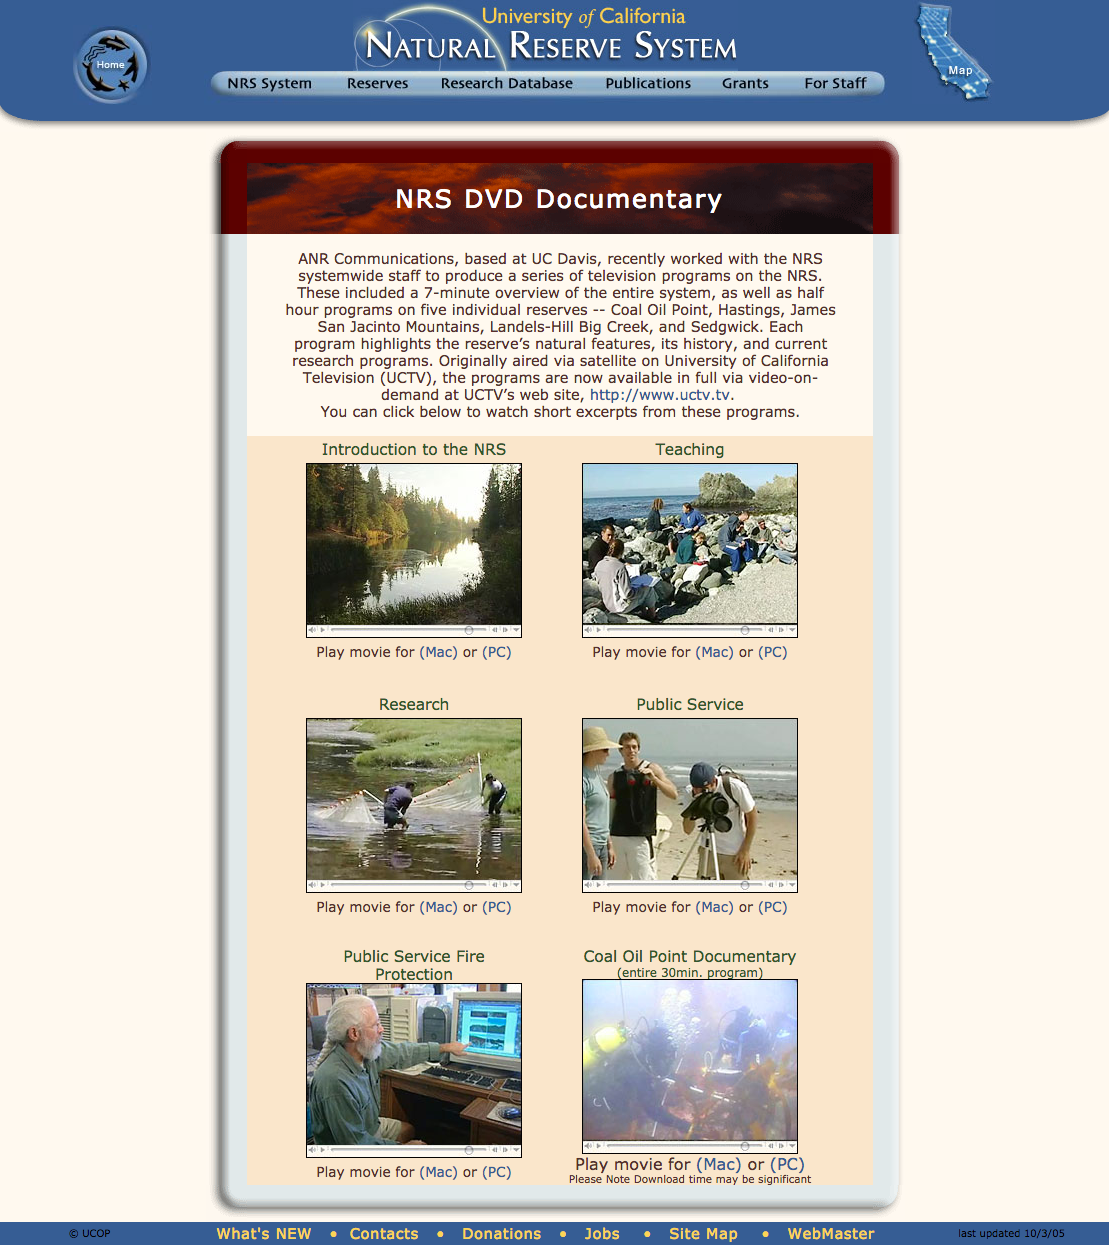 university of california Natural Reserve System nrs Nature css JavaScript HTML